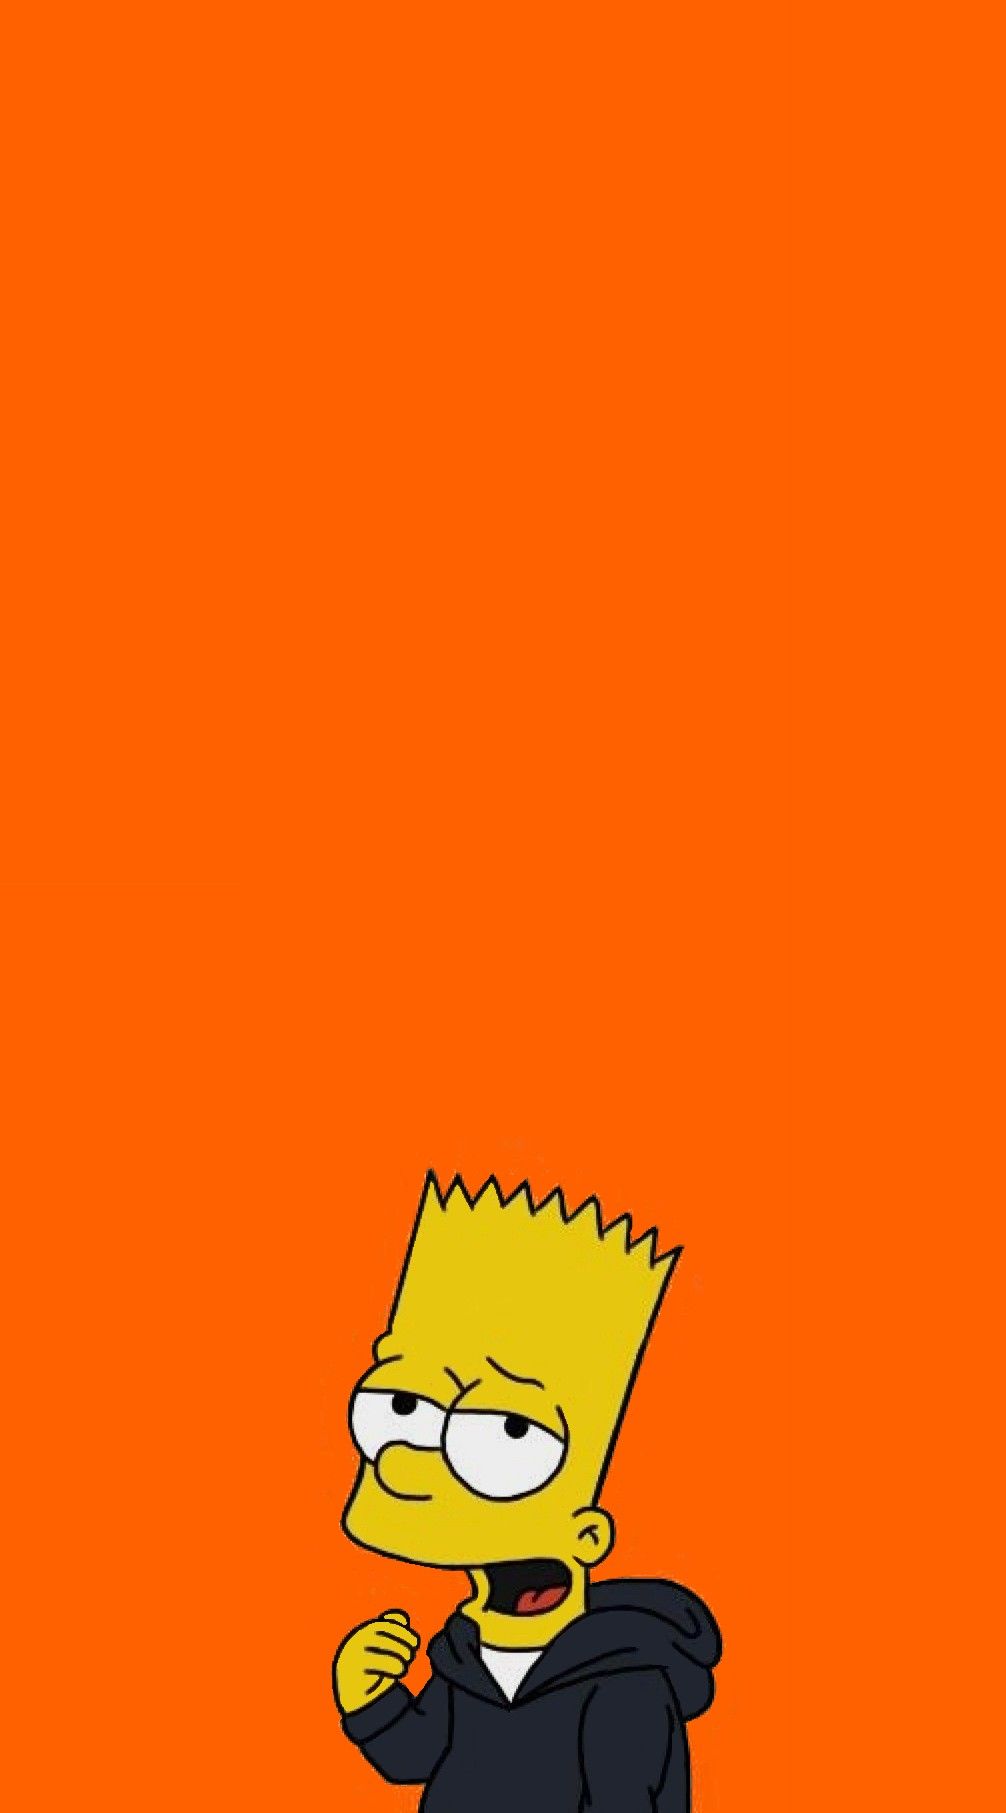  Die Simpsons Hintergrundbild 1006x1813. Aesthetic Bart Simpson. Simpson wallpaper iphone, iPhone wallpaper orange, Bart simpson art